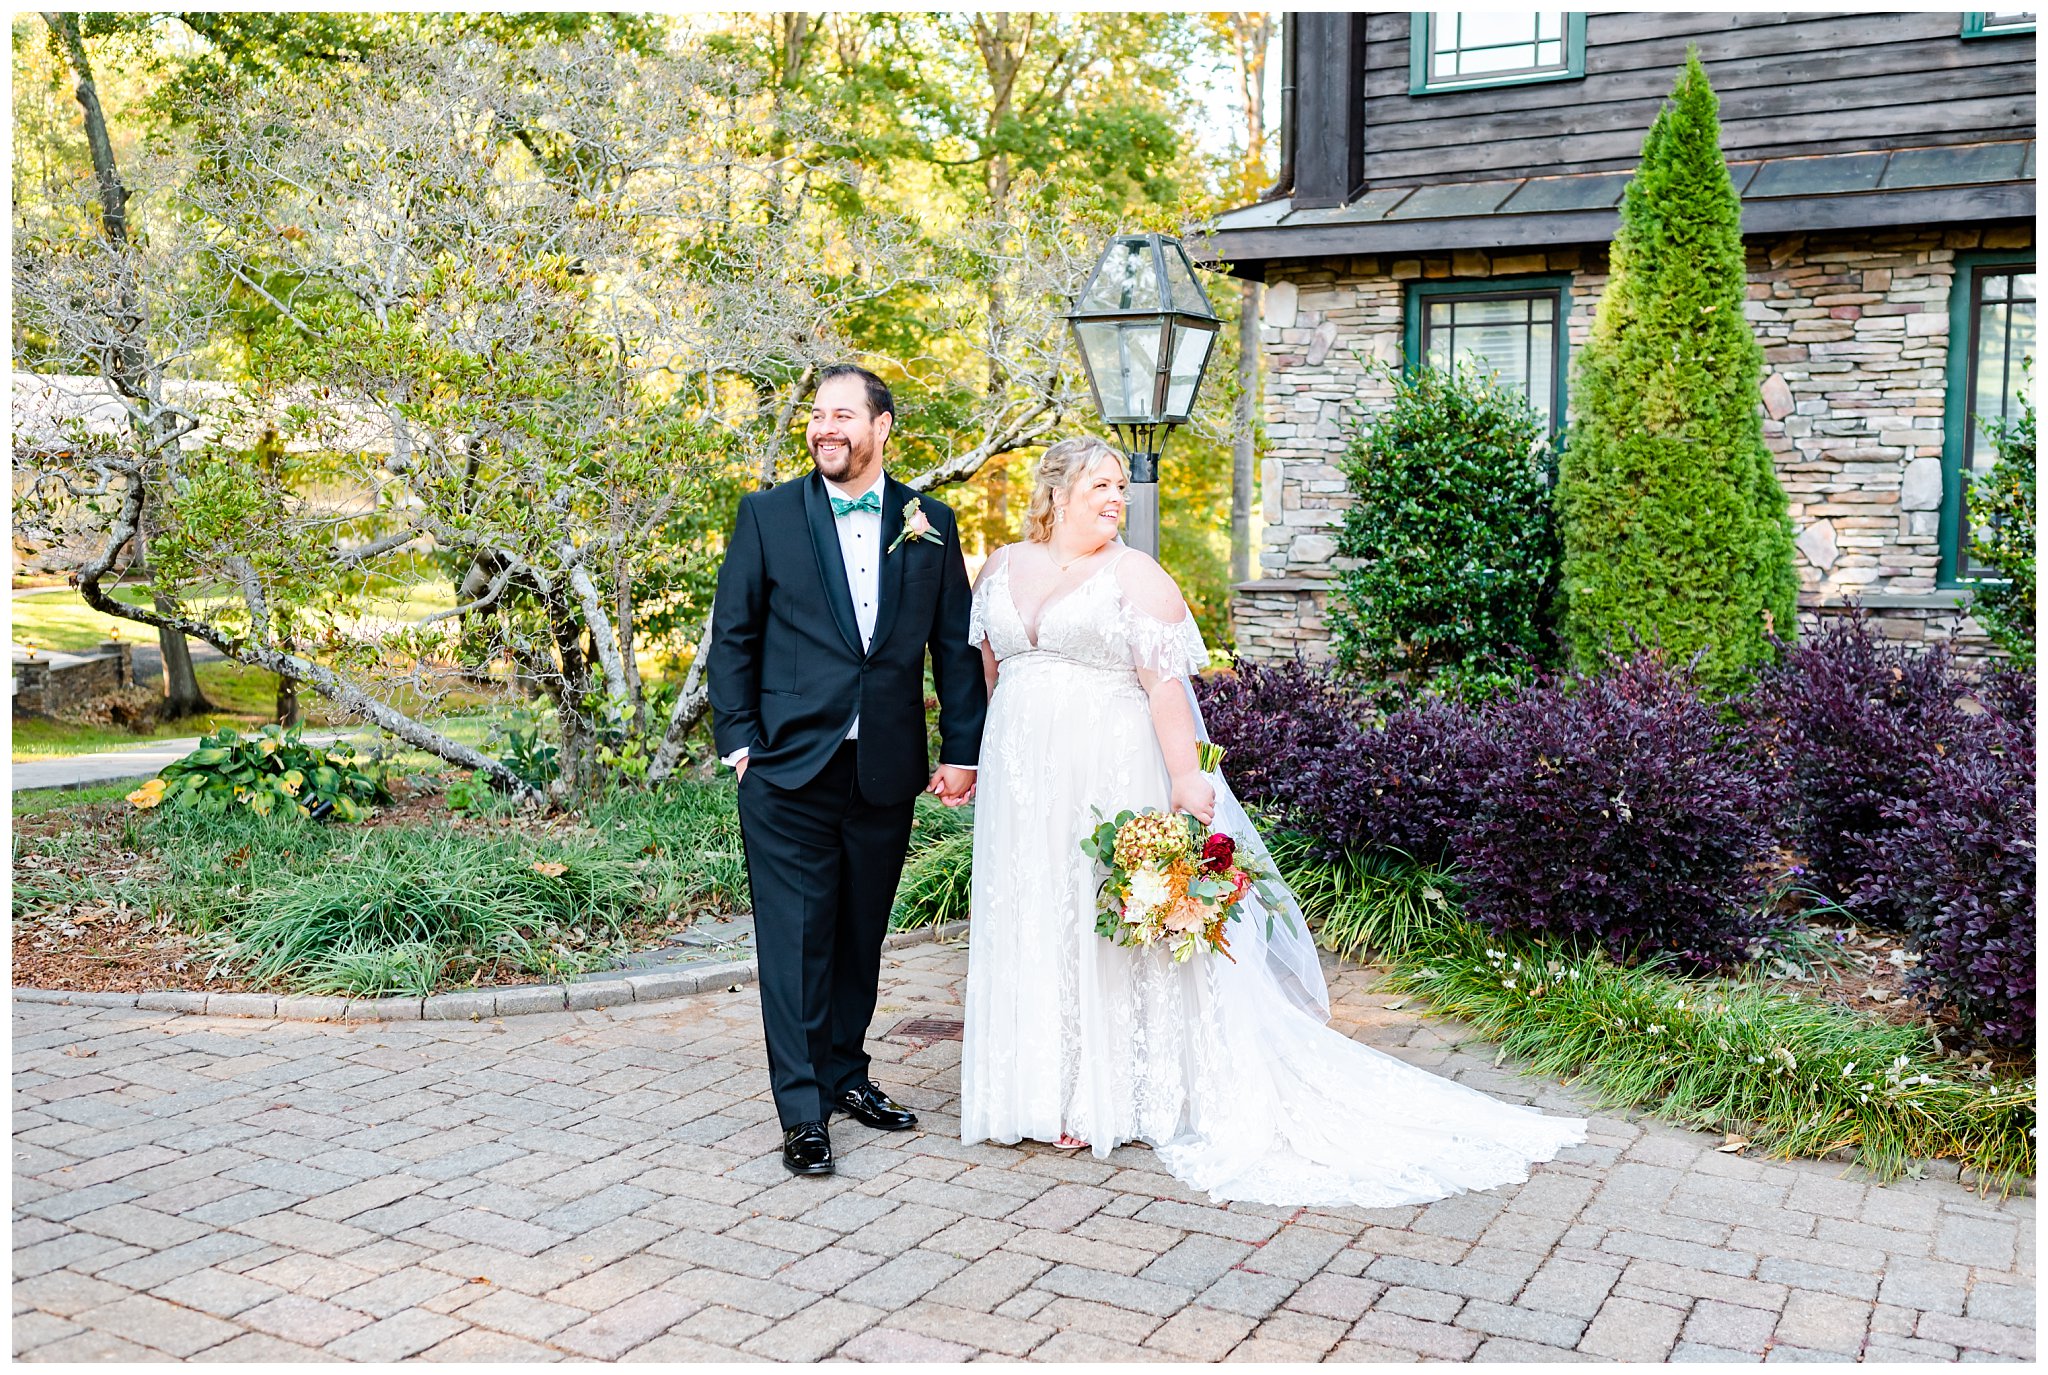 Charlotte wedding photographer captures bride and groom